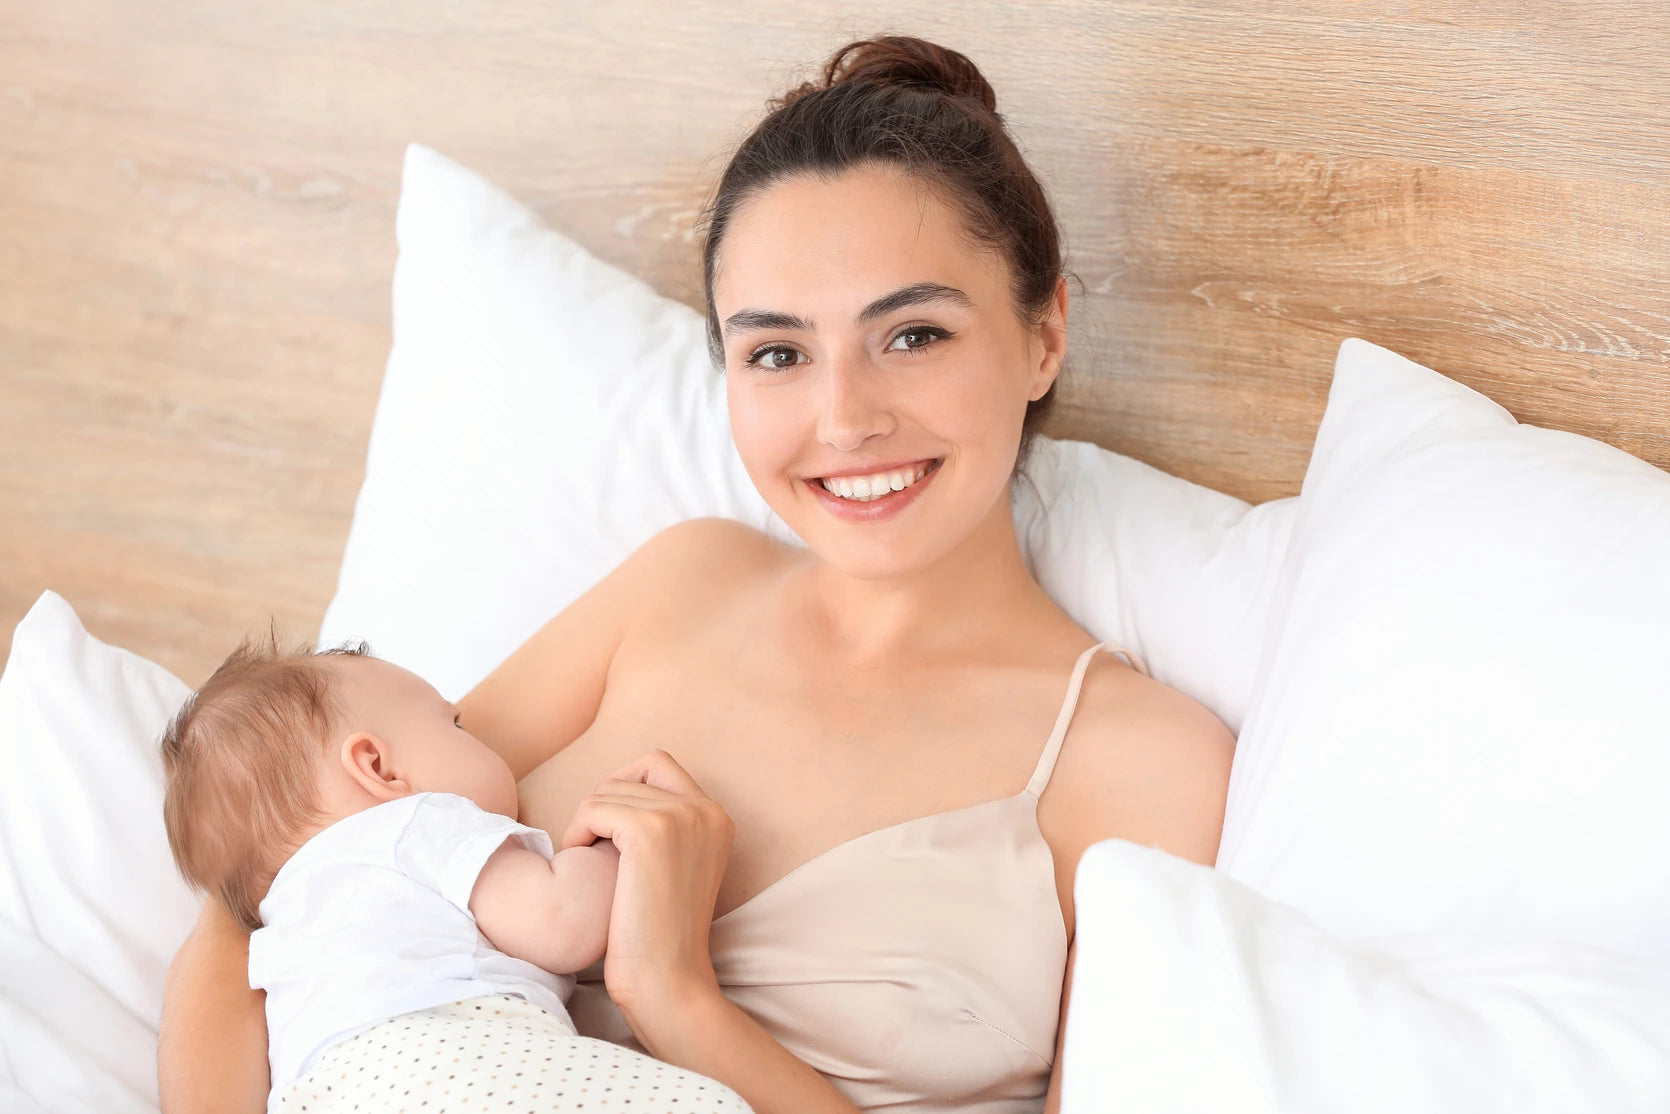 20 Best Foods for Breastfeeding Moms